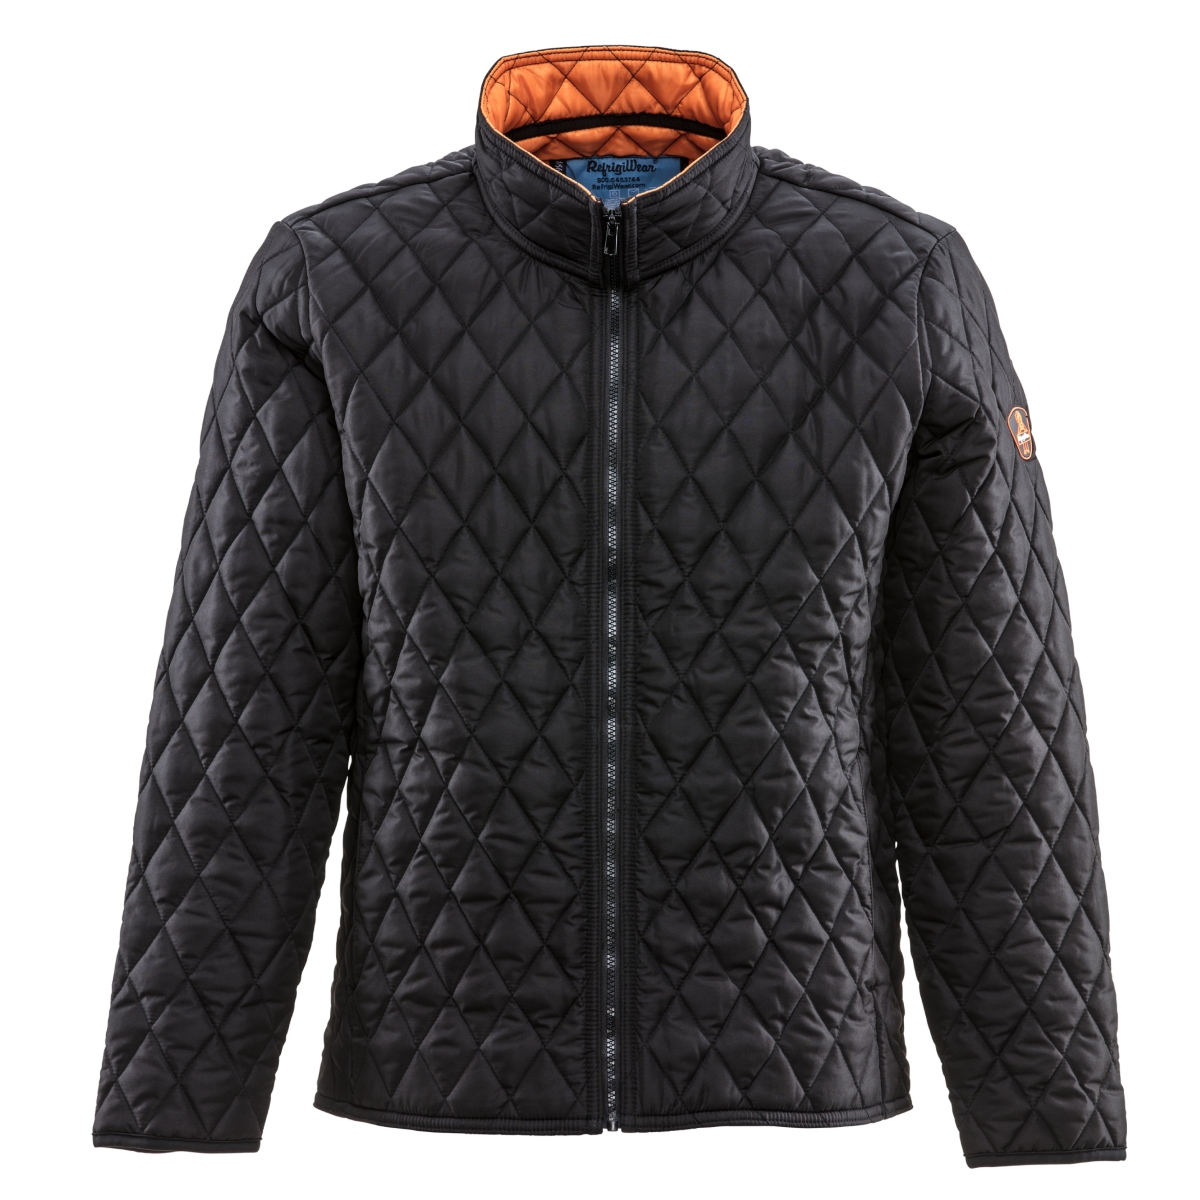 Men's Lightweight Warm Insulated Diamond Quilted Jacket - Black